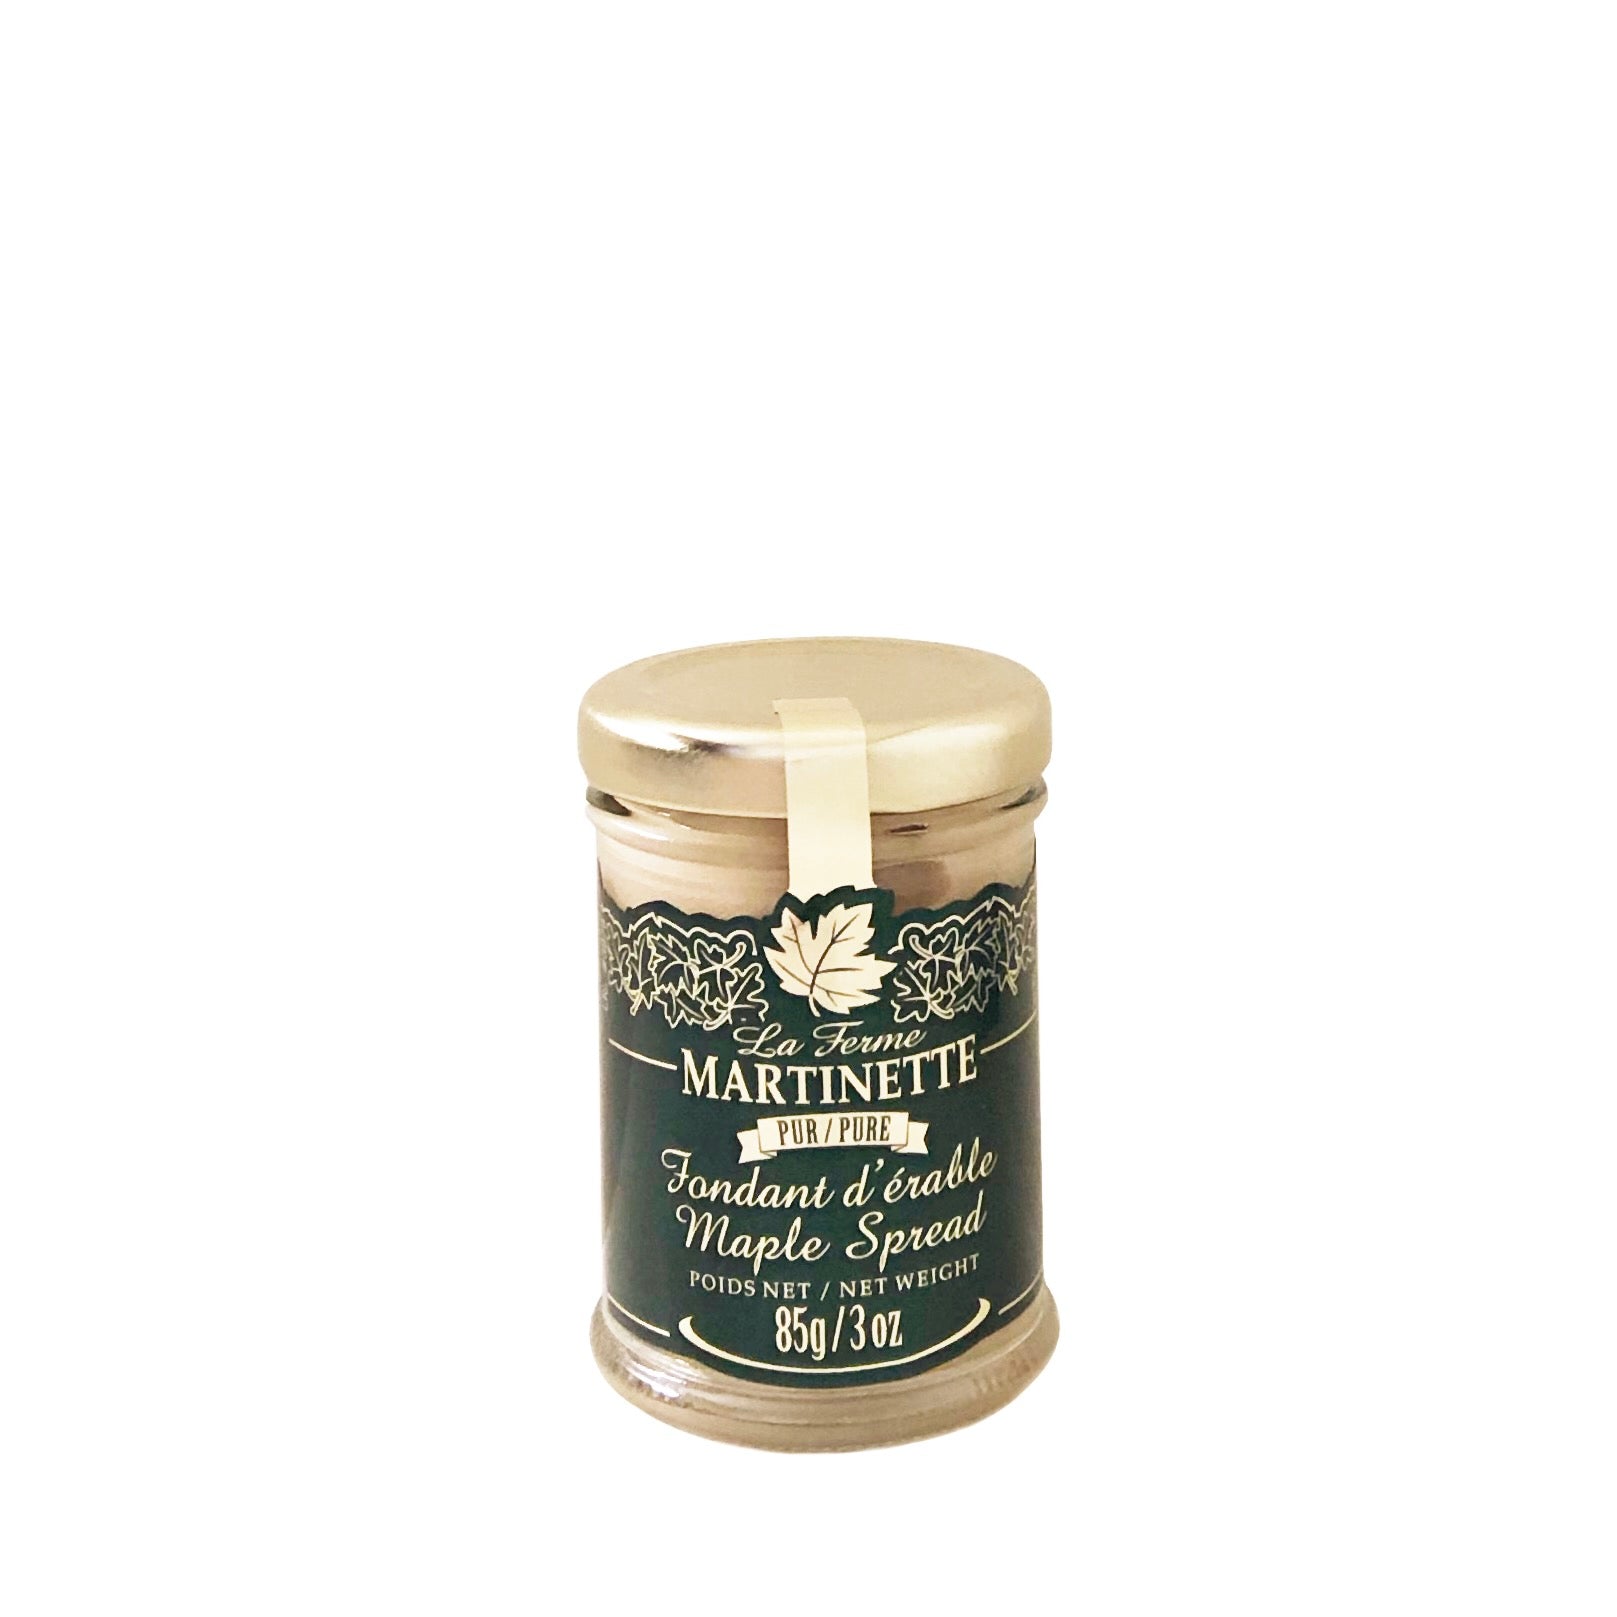 Pure maple spread - pure Ahorncreme aus Kanada, Grade A, Glas, 85g